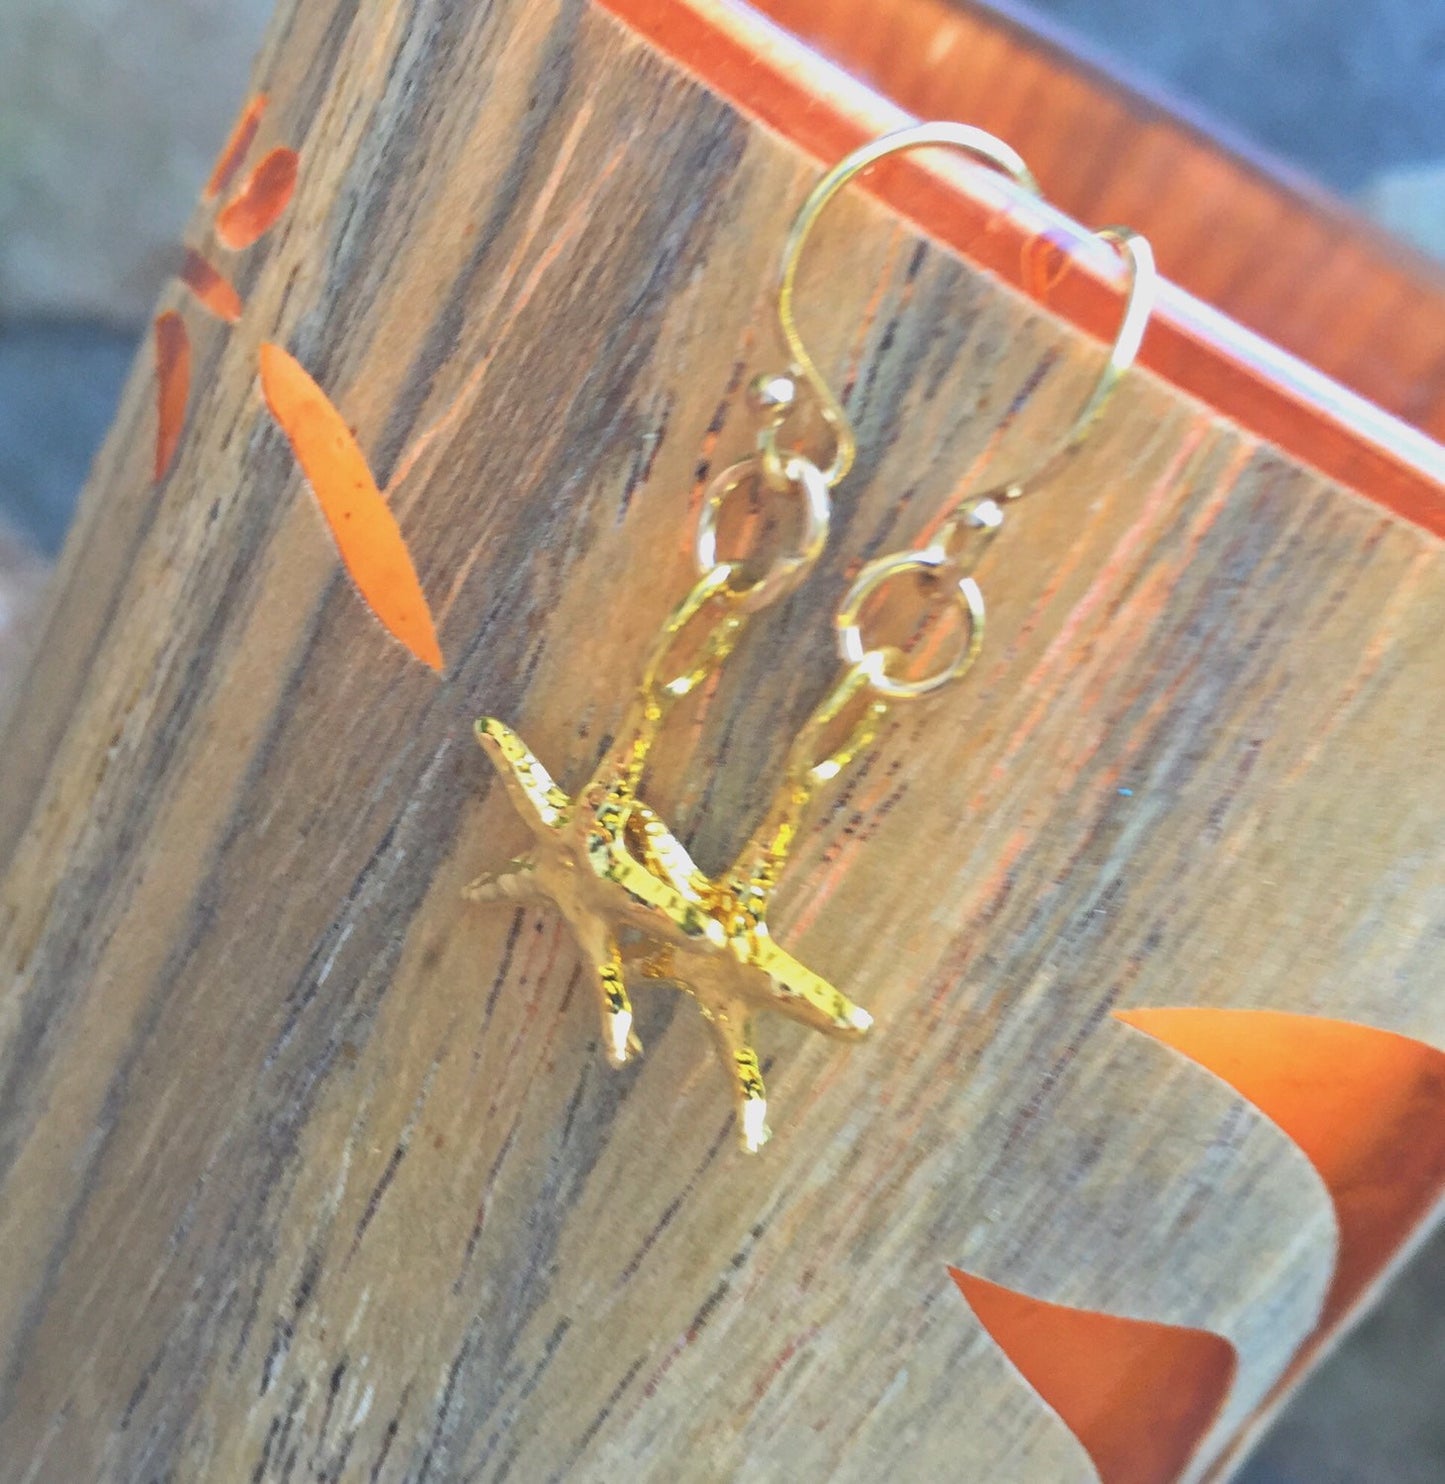 Starfish Earrings, Gold Starfish Earrings, Beach Earrings, Christmas Gifts Mom, Hawaiian Earrings, natashaaloha - Natashaaloha, jewelry, bracelets, necklace, keychains, fishing lures, gifts for men, charms, personalized, 